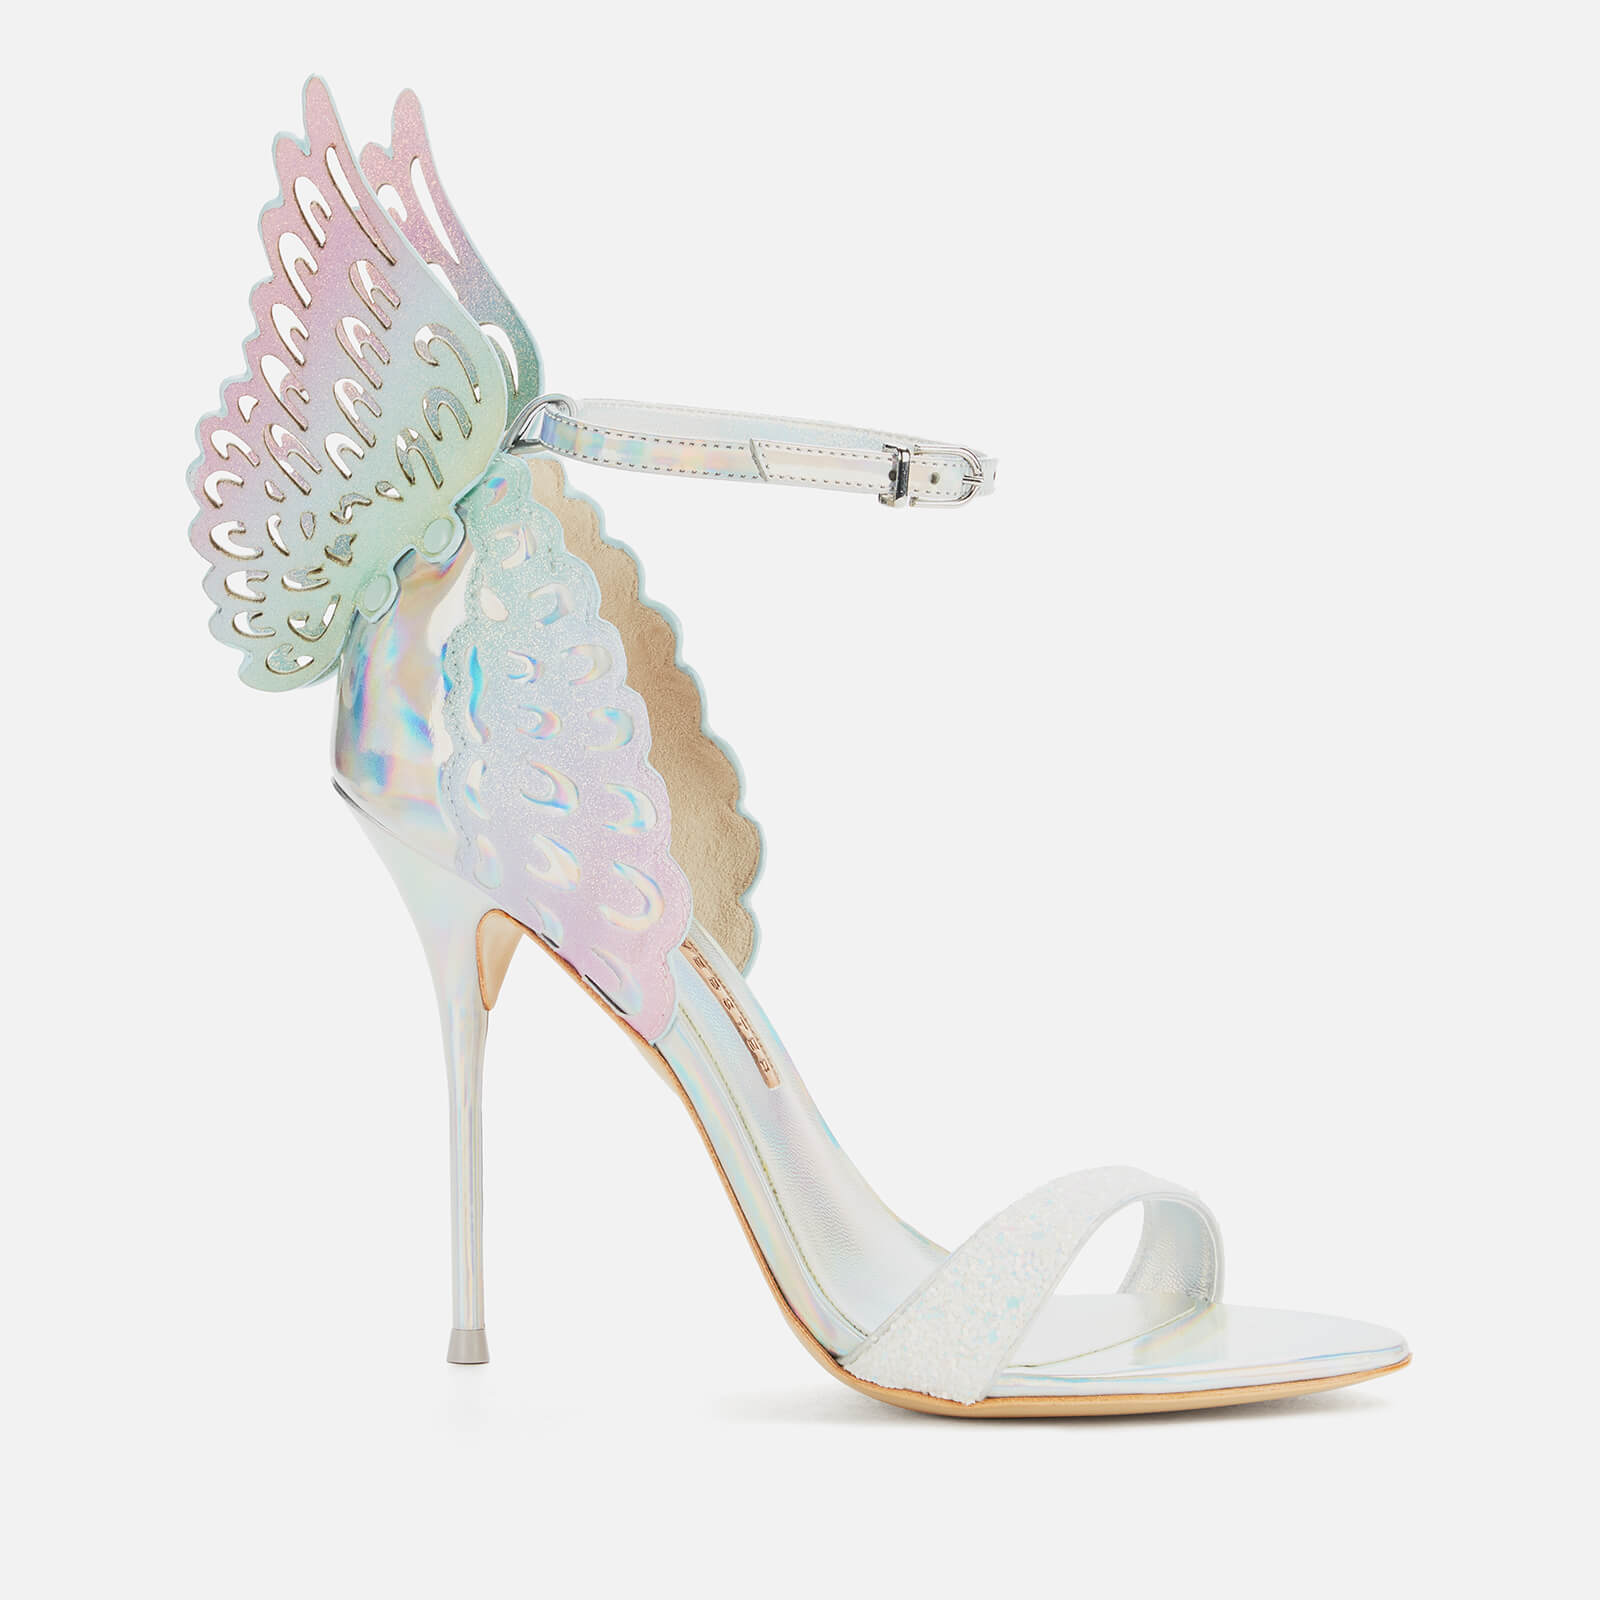 Sophia Webster Women's Evangeline Heeled Sandals - Holographic/Multi Glitter - UK 3